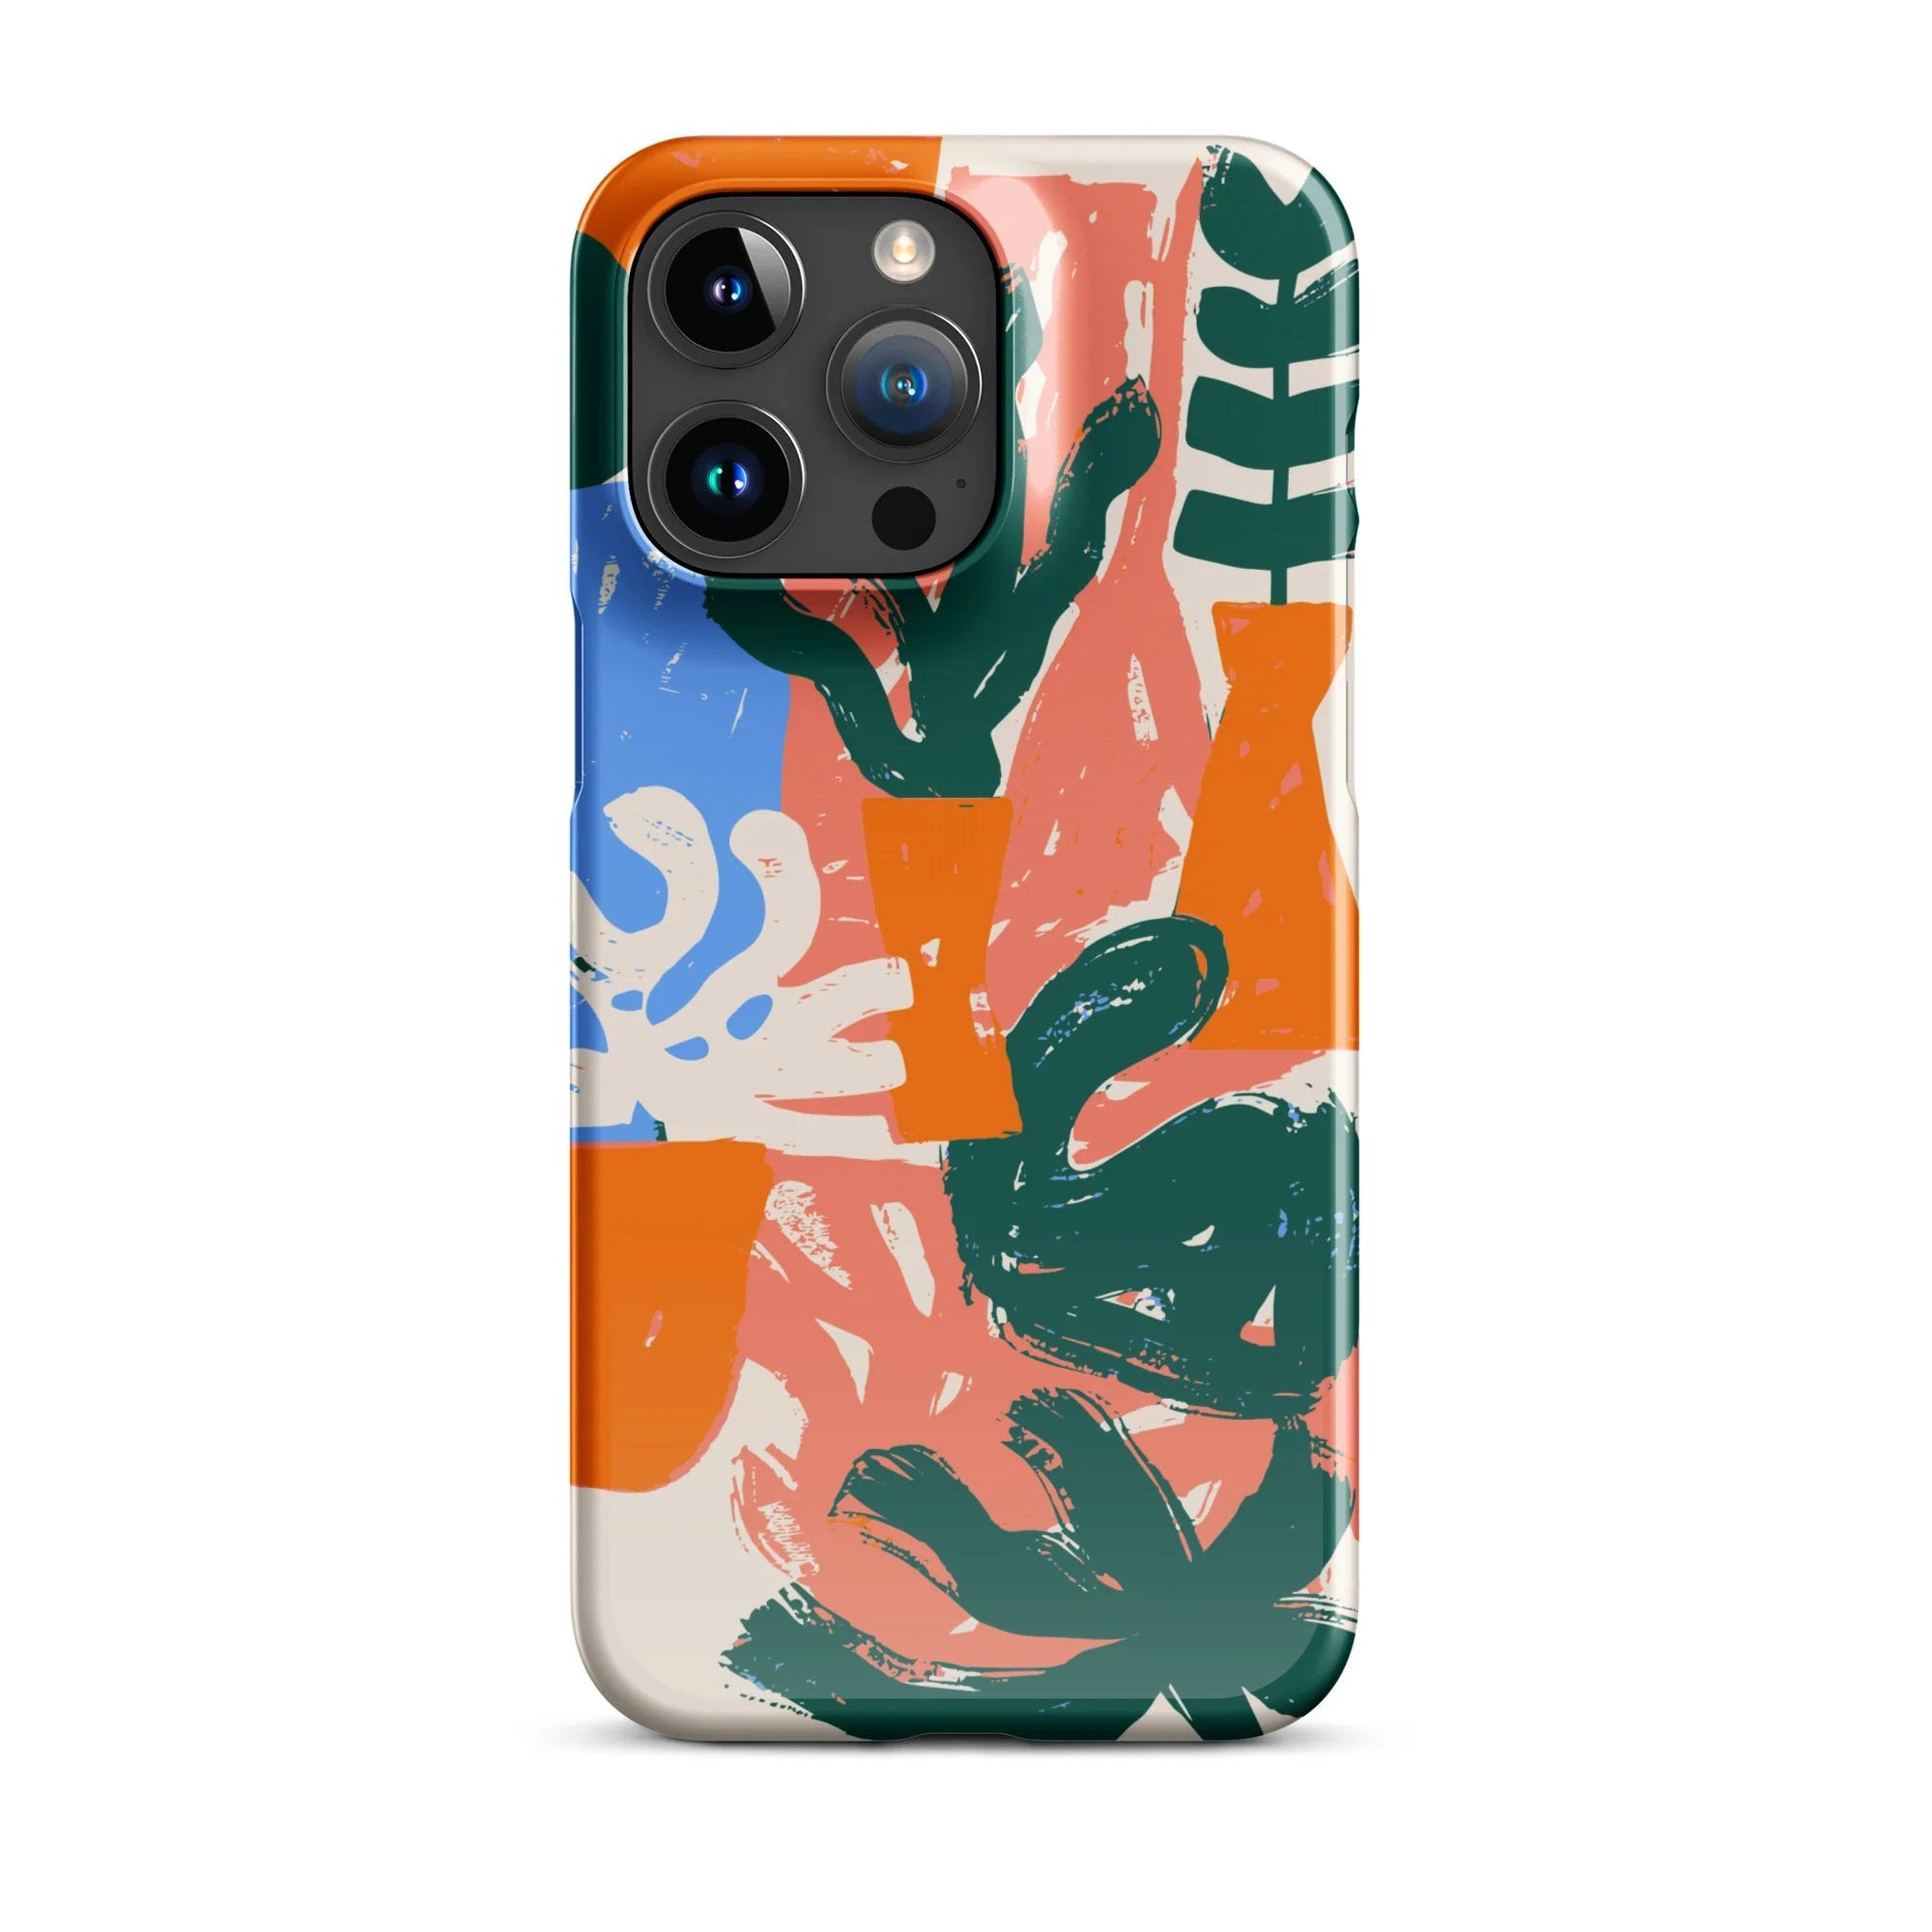 Plantz® iPhone® snap case